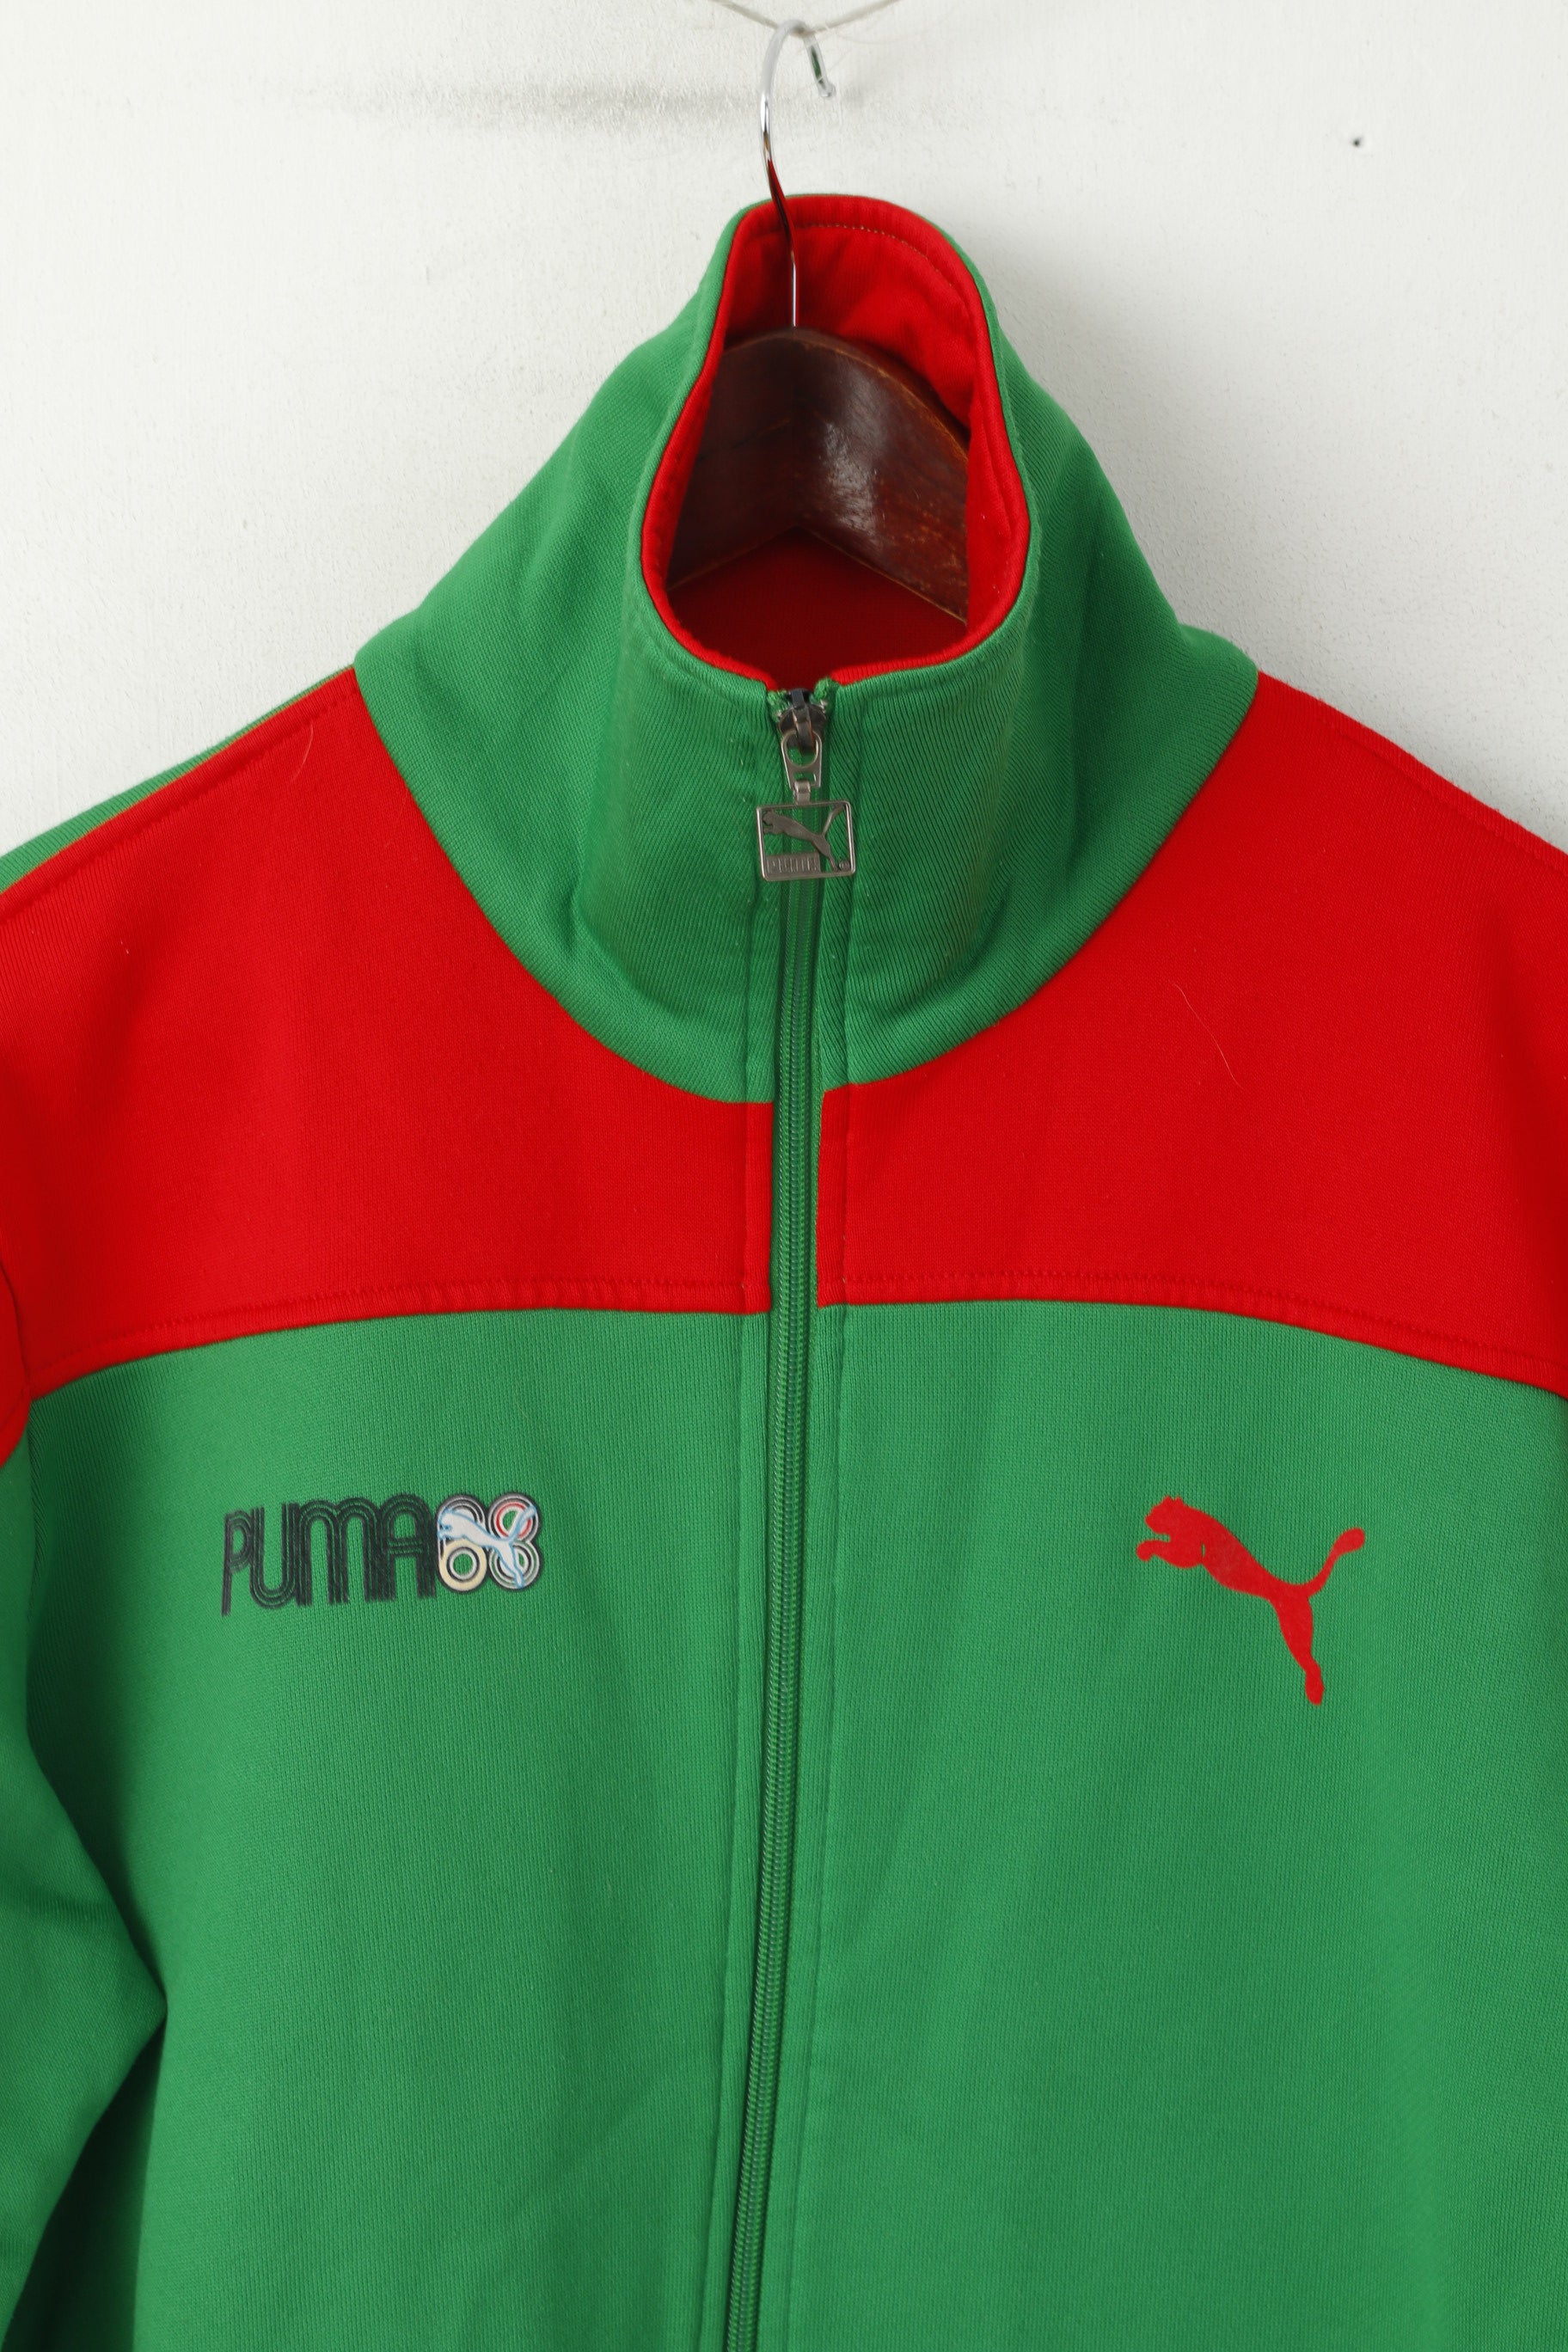 Puma Men L (M) Sweatshirt Green Red Vintage Oldschool 80s Full Zip ...